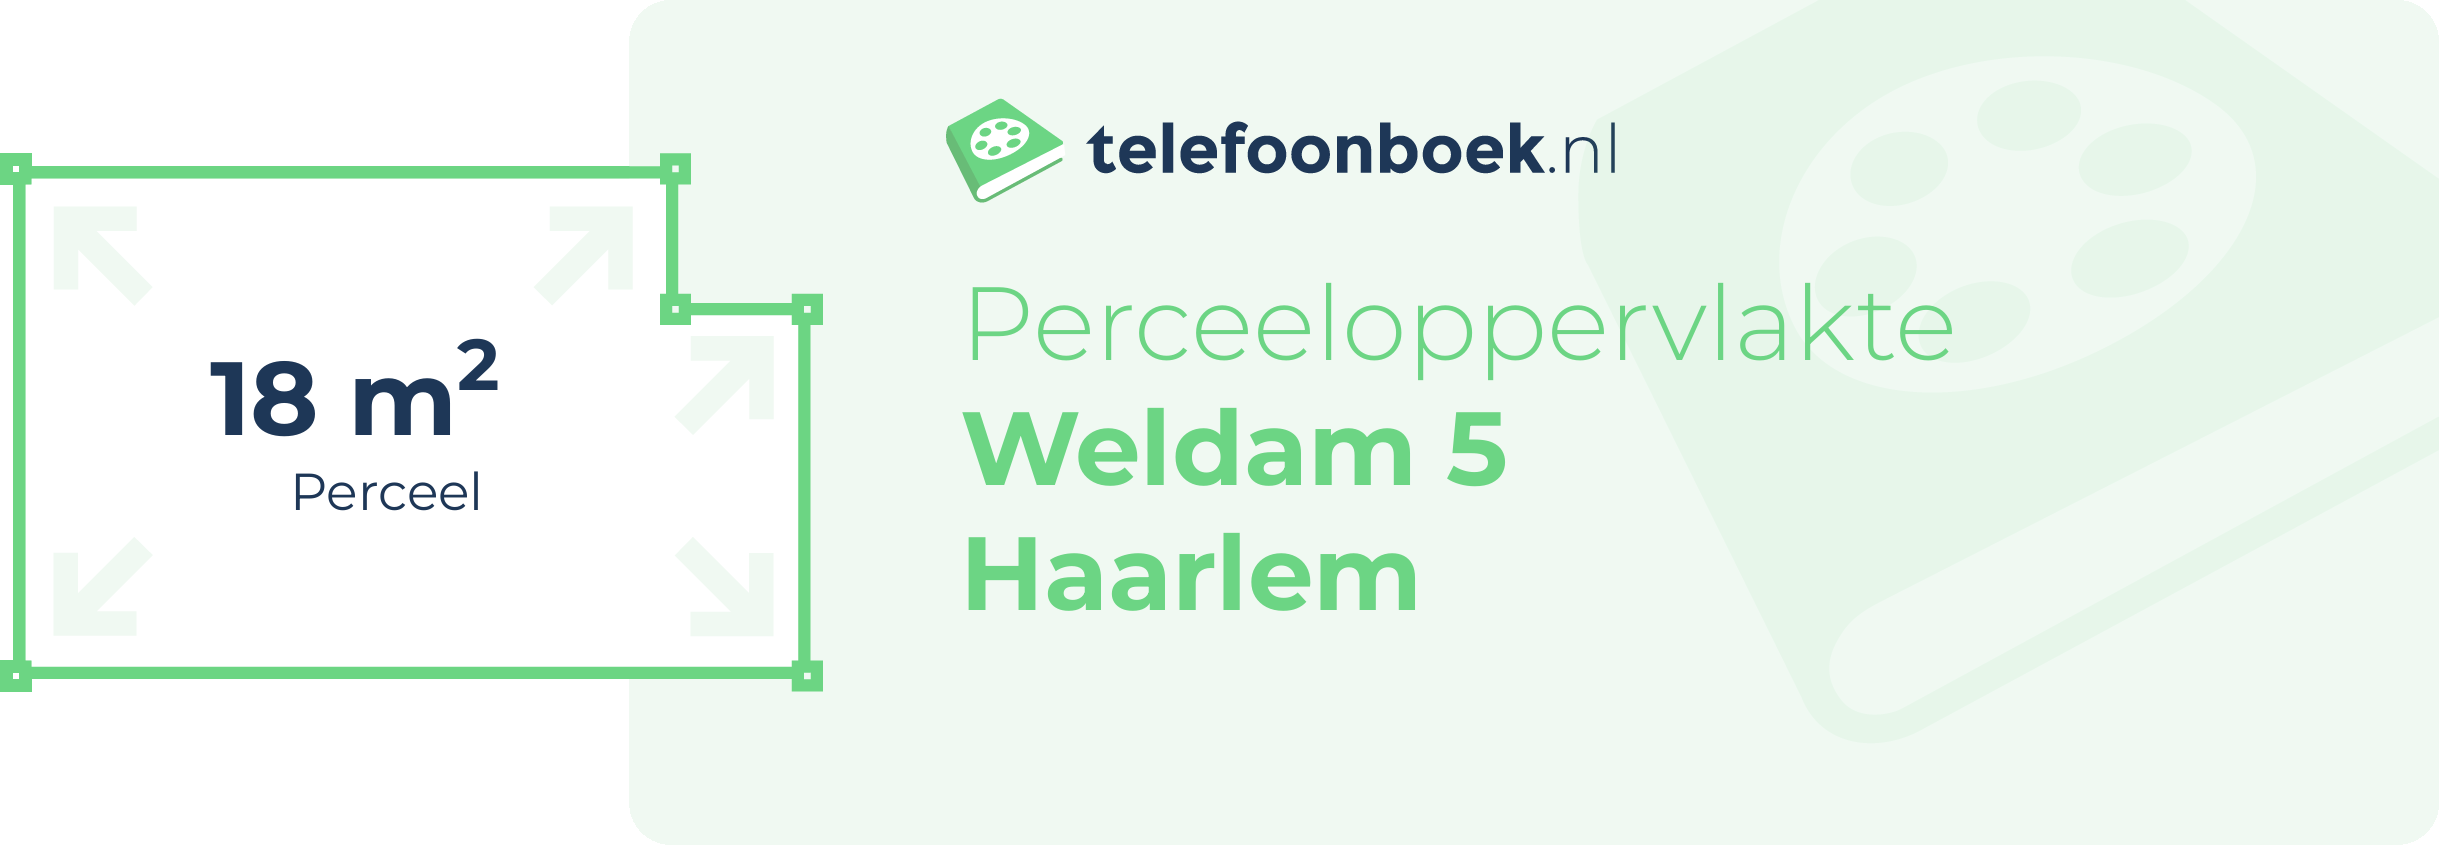 Perceeloppervlakte Weldam 5 Haarlem